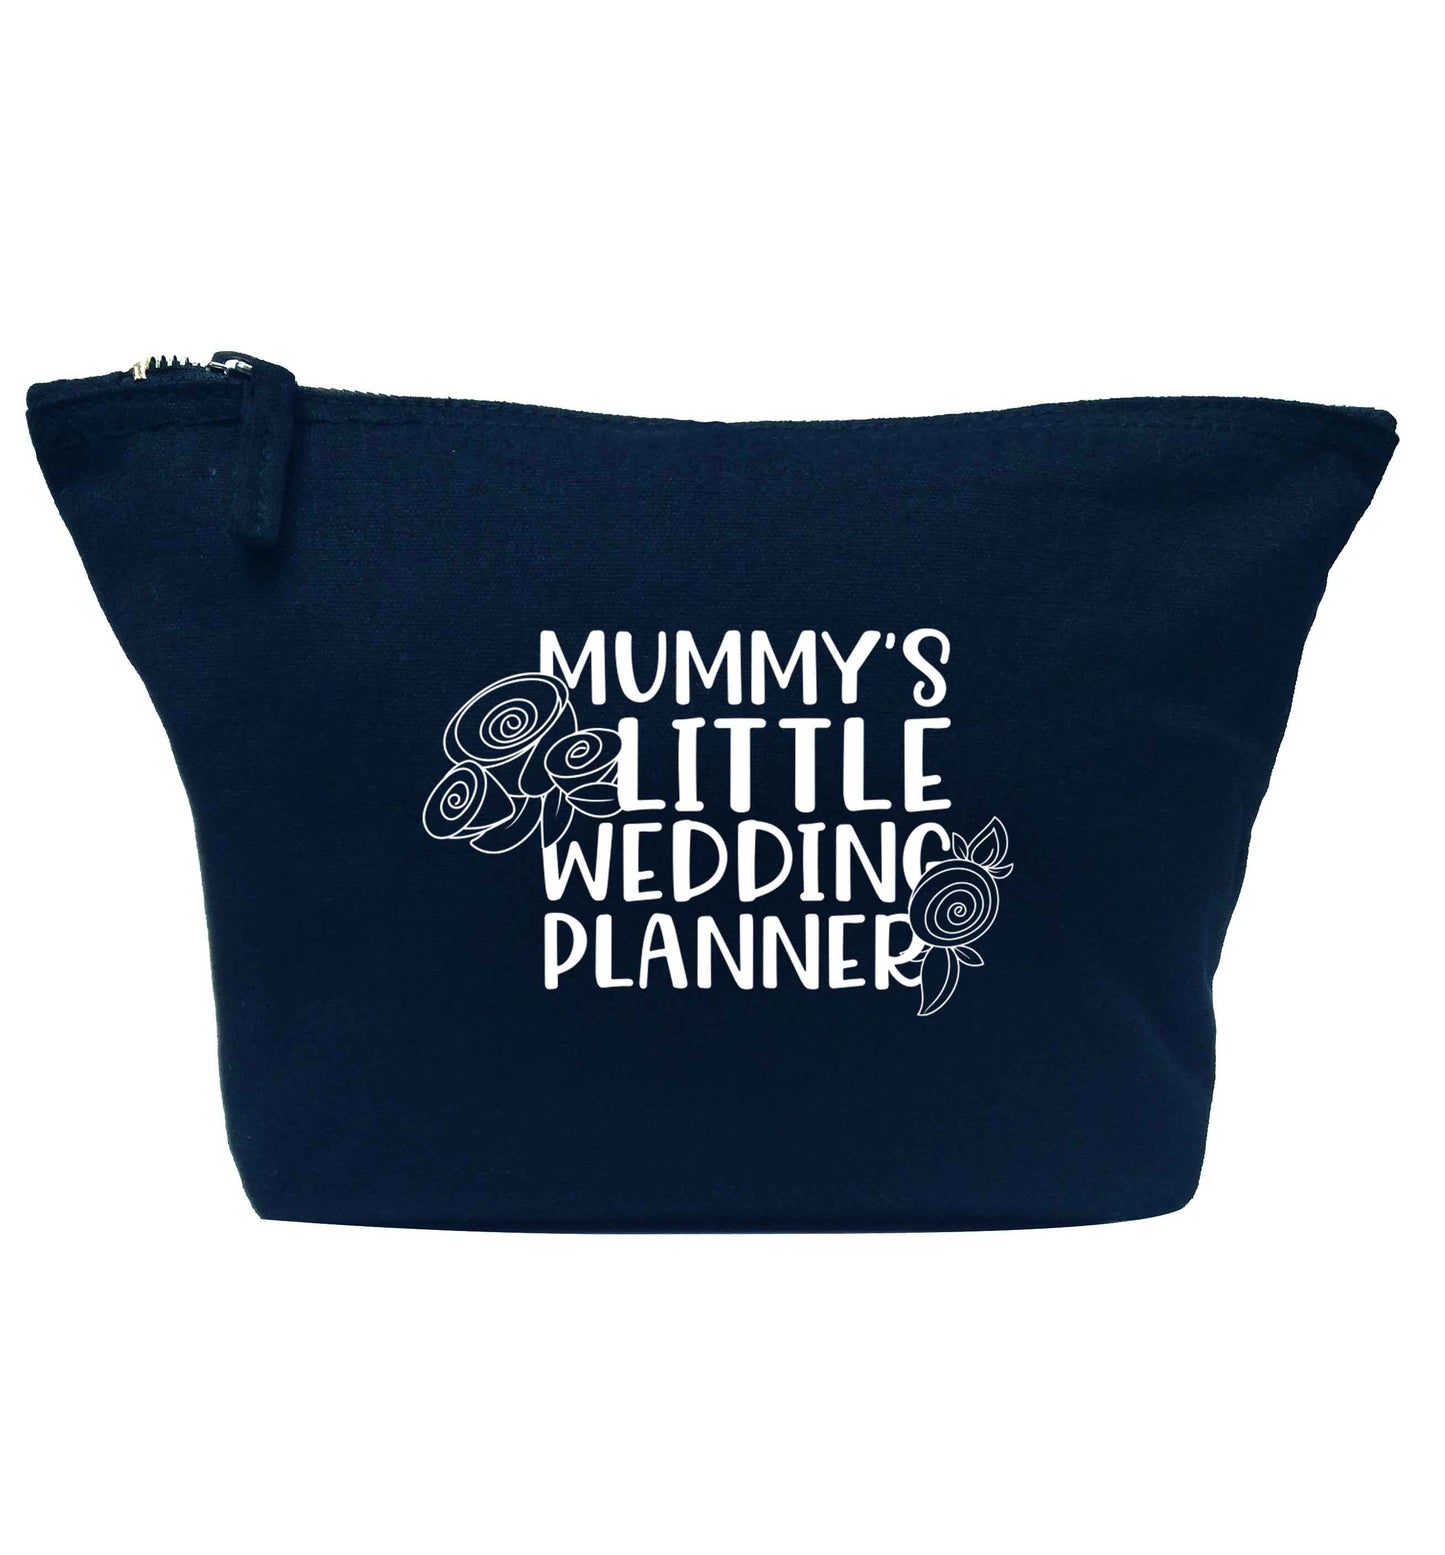 adorable wedding themed gifts for your mini wedding planner! navy makeup bag